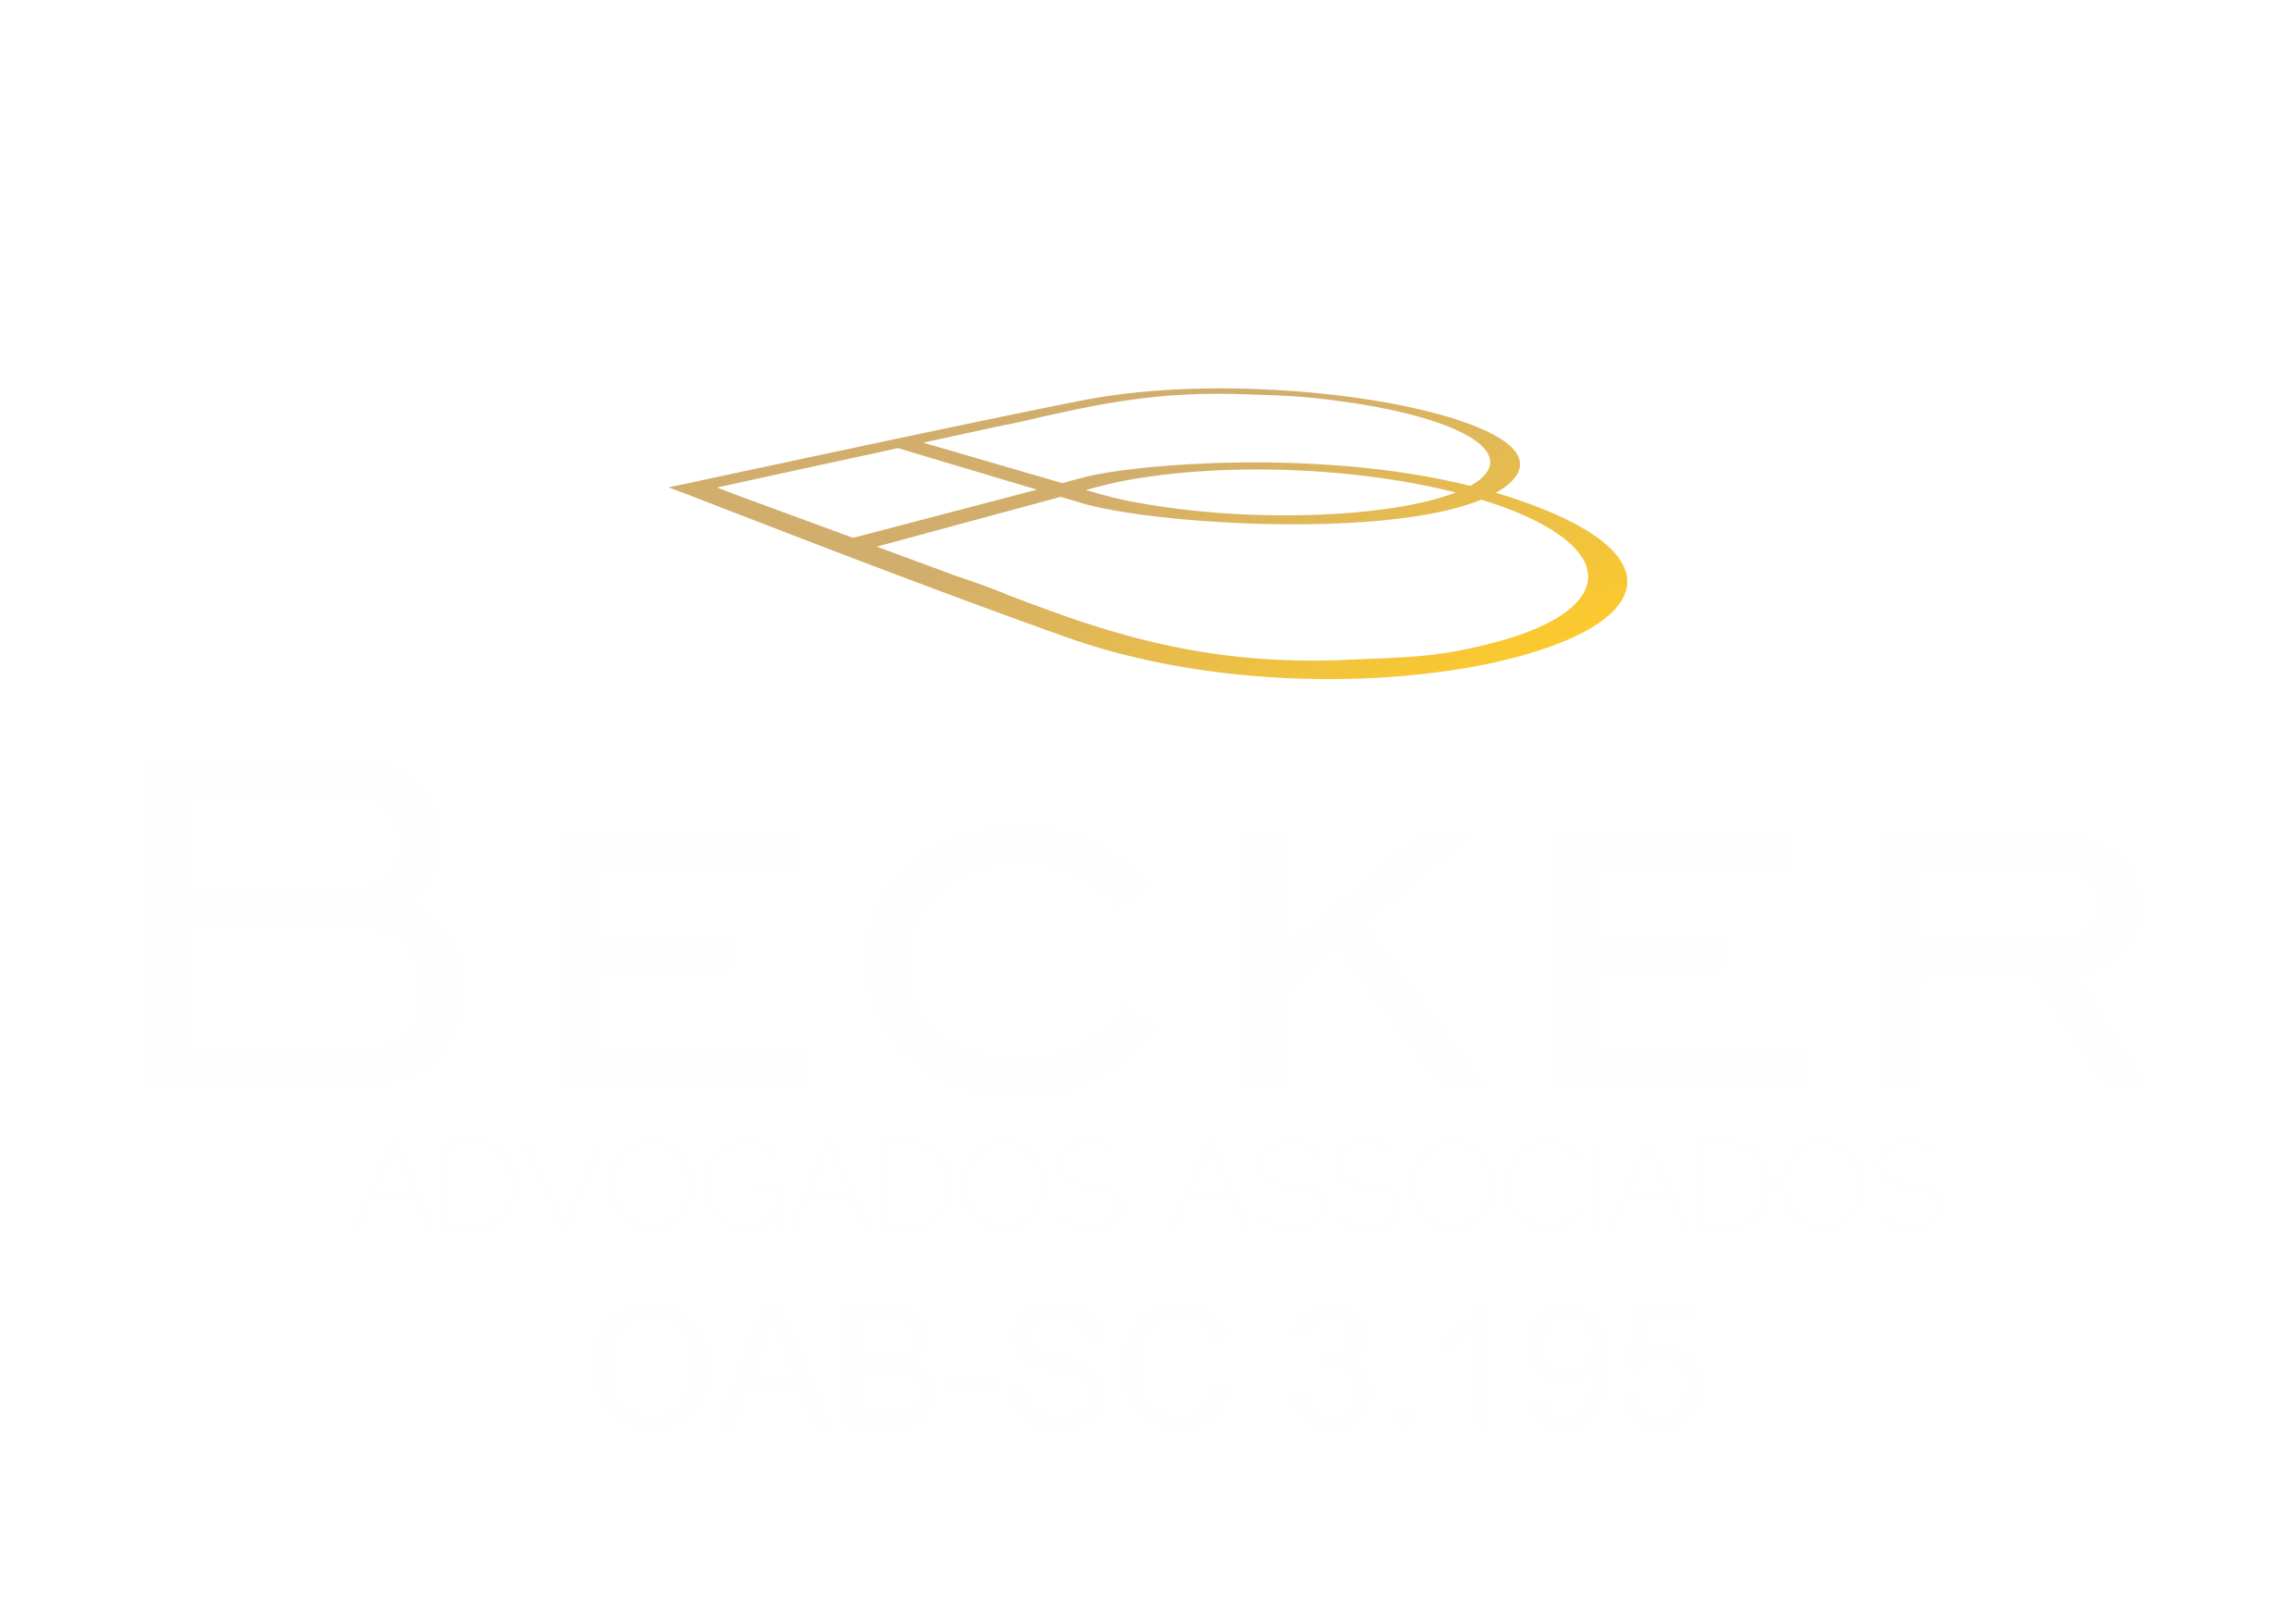 Becker Advogado em Joinville e Maringá